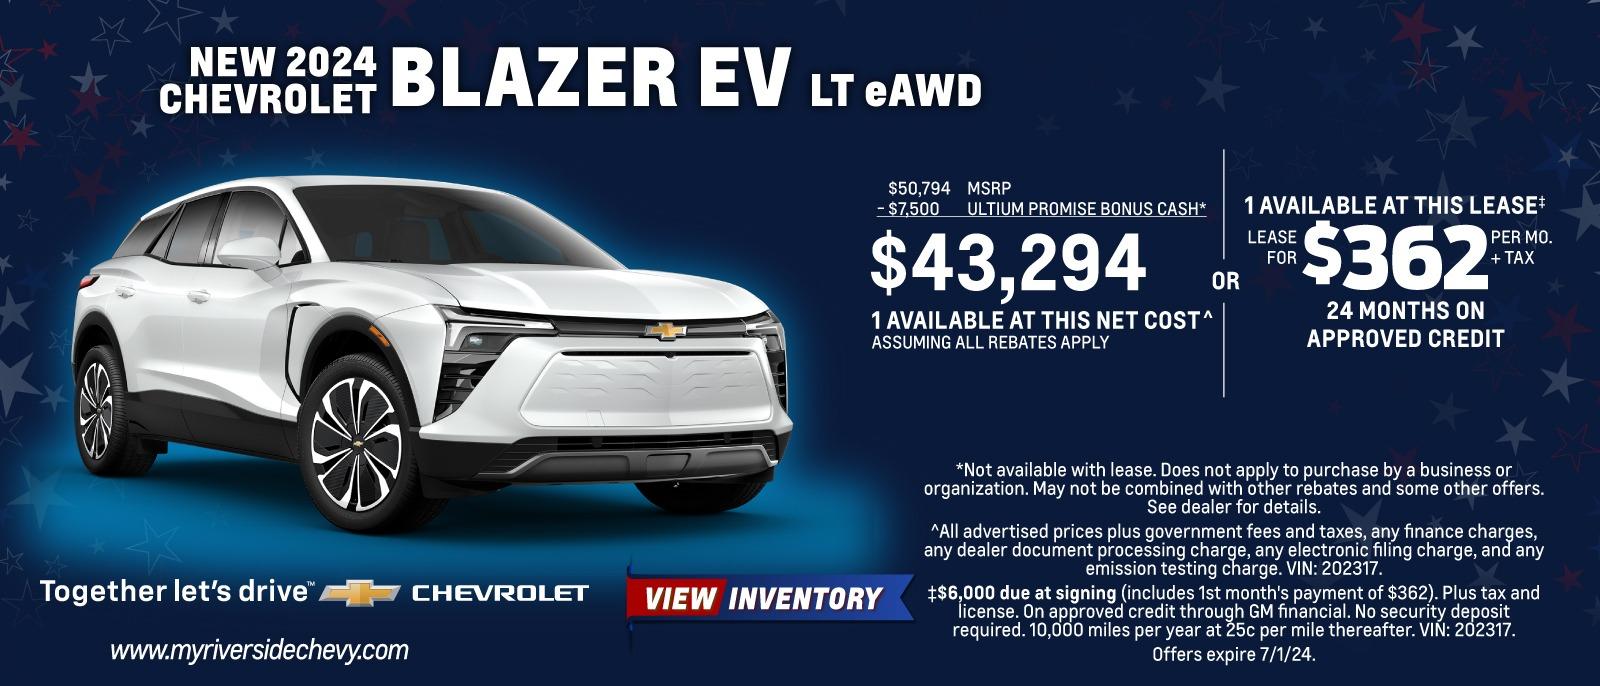 New 2024 Chevy  Blazer EV LT EAWD - $50,794 MSRP -$7,500 ULTIUM PROMISE BONUS CASH* $43,294 1 AVAILABLE AT THIS NET COST